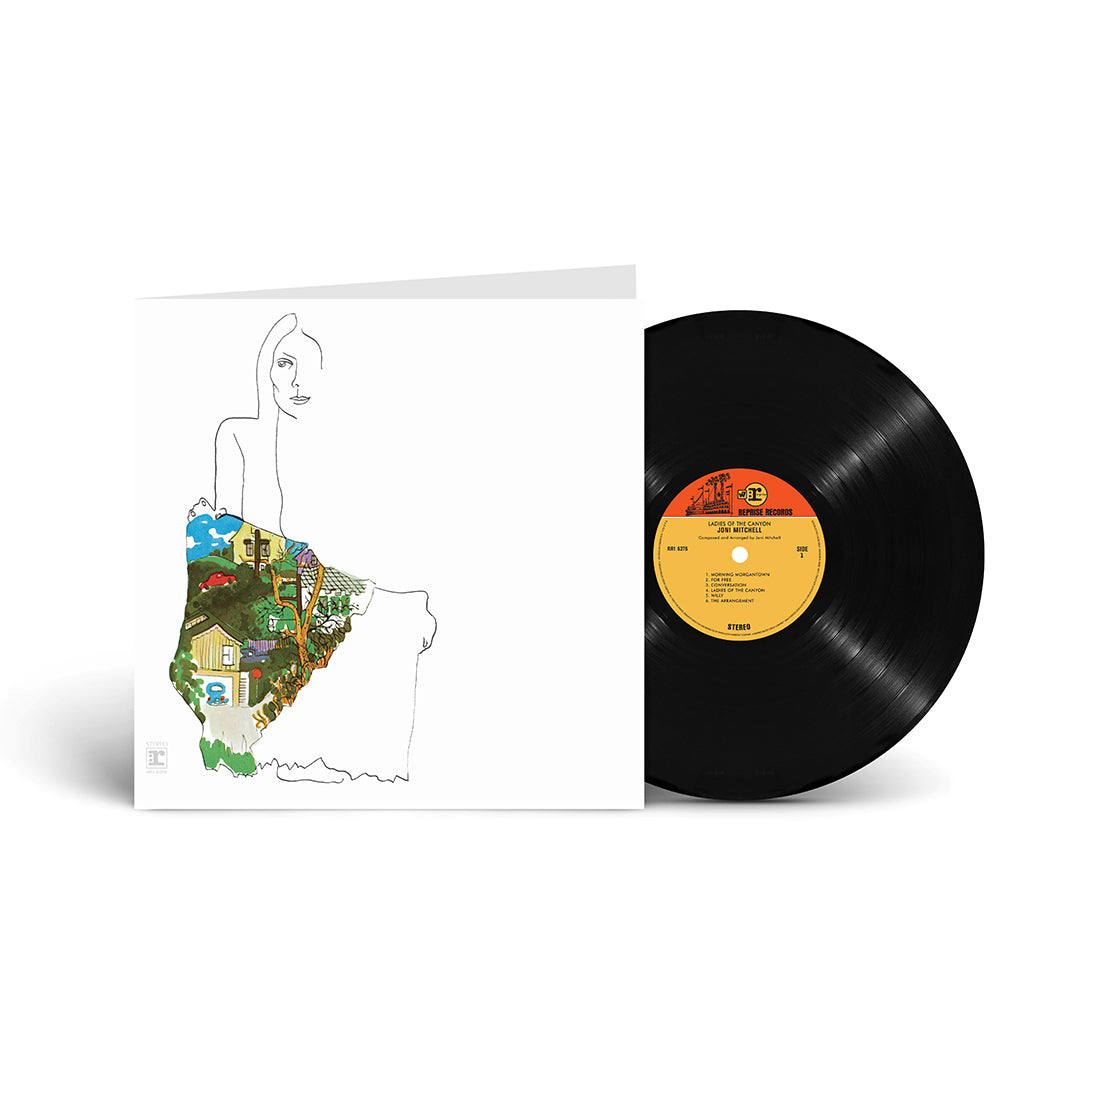 Joni Mitchell - Ladies of the Canyon: Vinyl LP